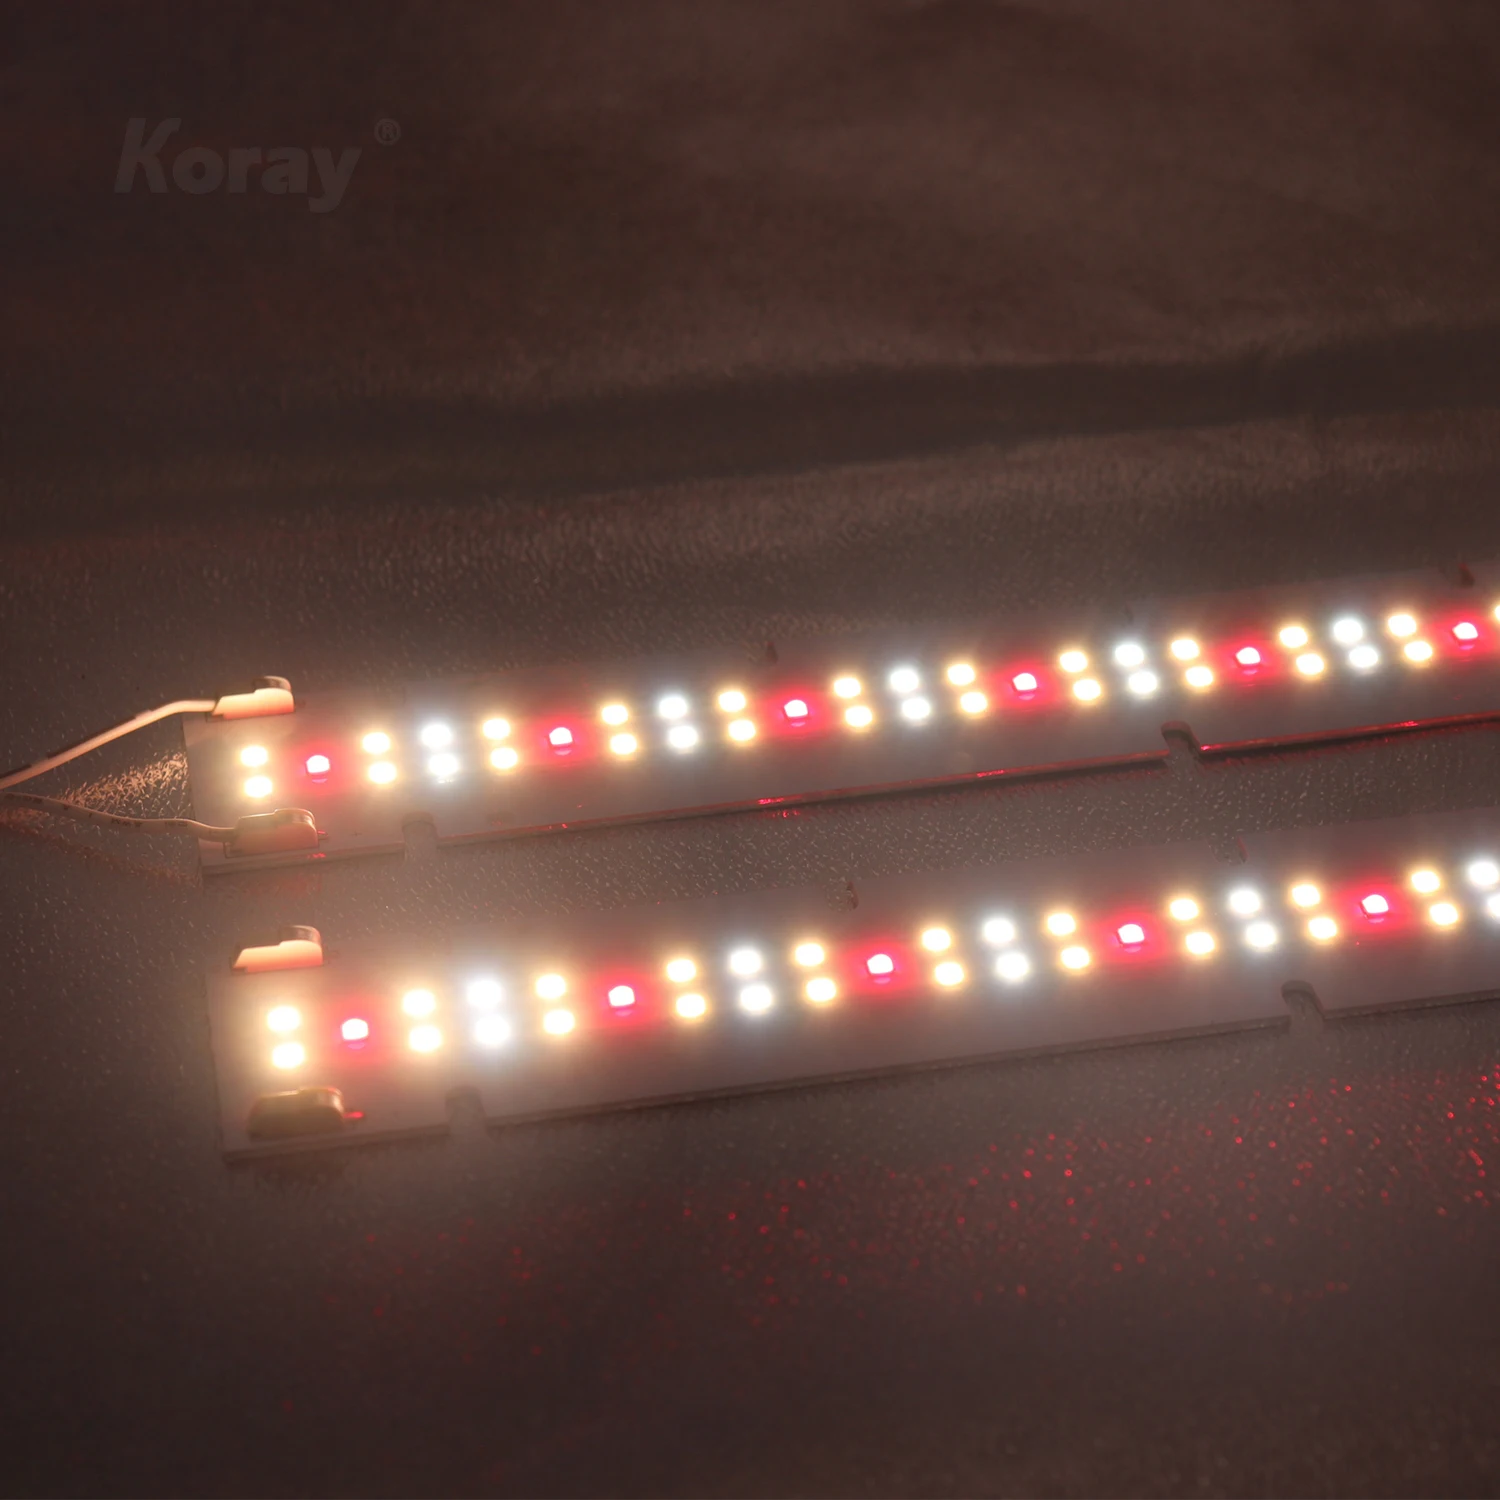 Koray QB128 qb 96  lm301 h lm 301b strip with epistar 660 nm led grow light bar PCBA